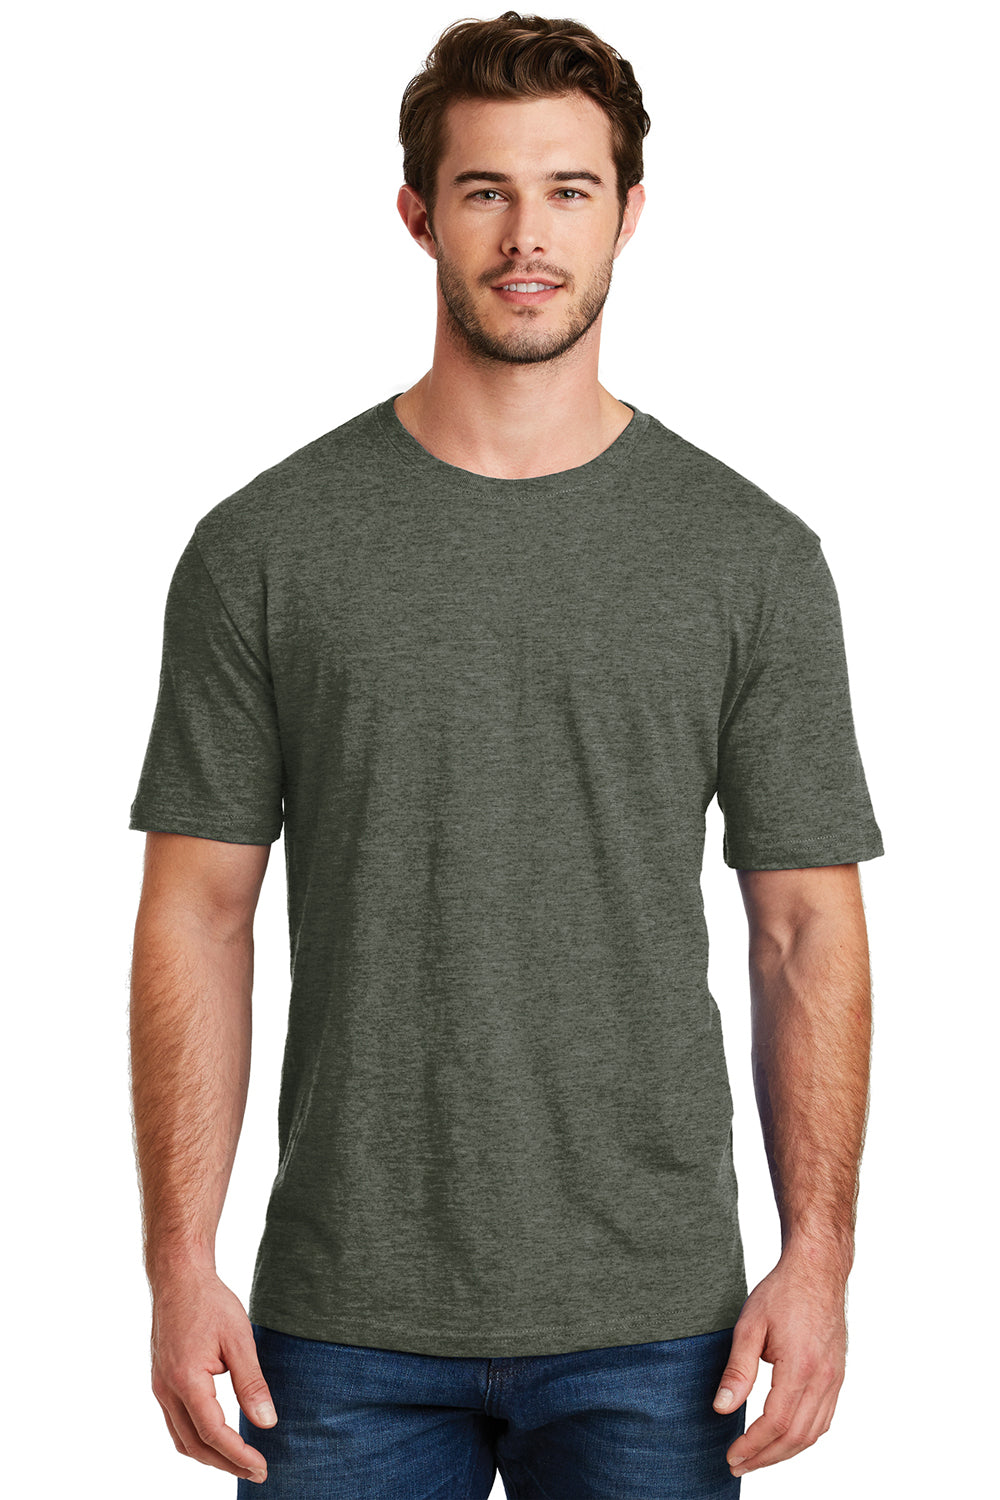 District DM108 Mens Perfect Blend Short Sleeve Crewneck T-Shirt Heather Olive Green Front